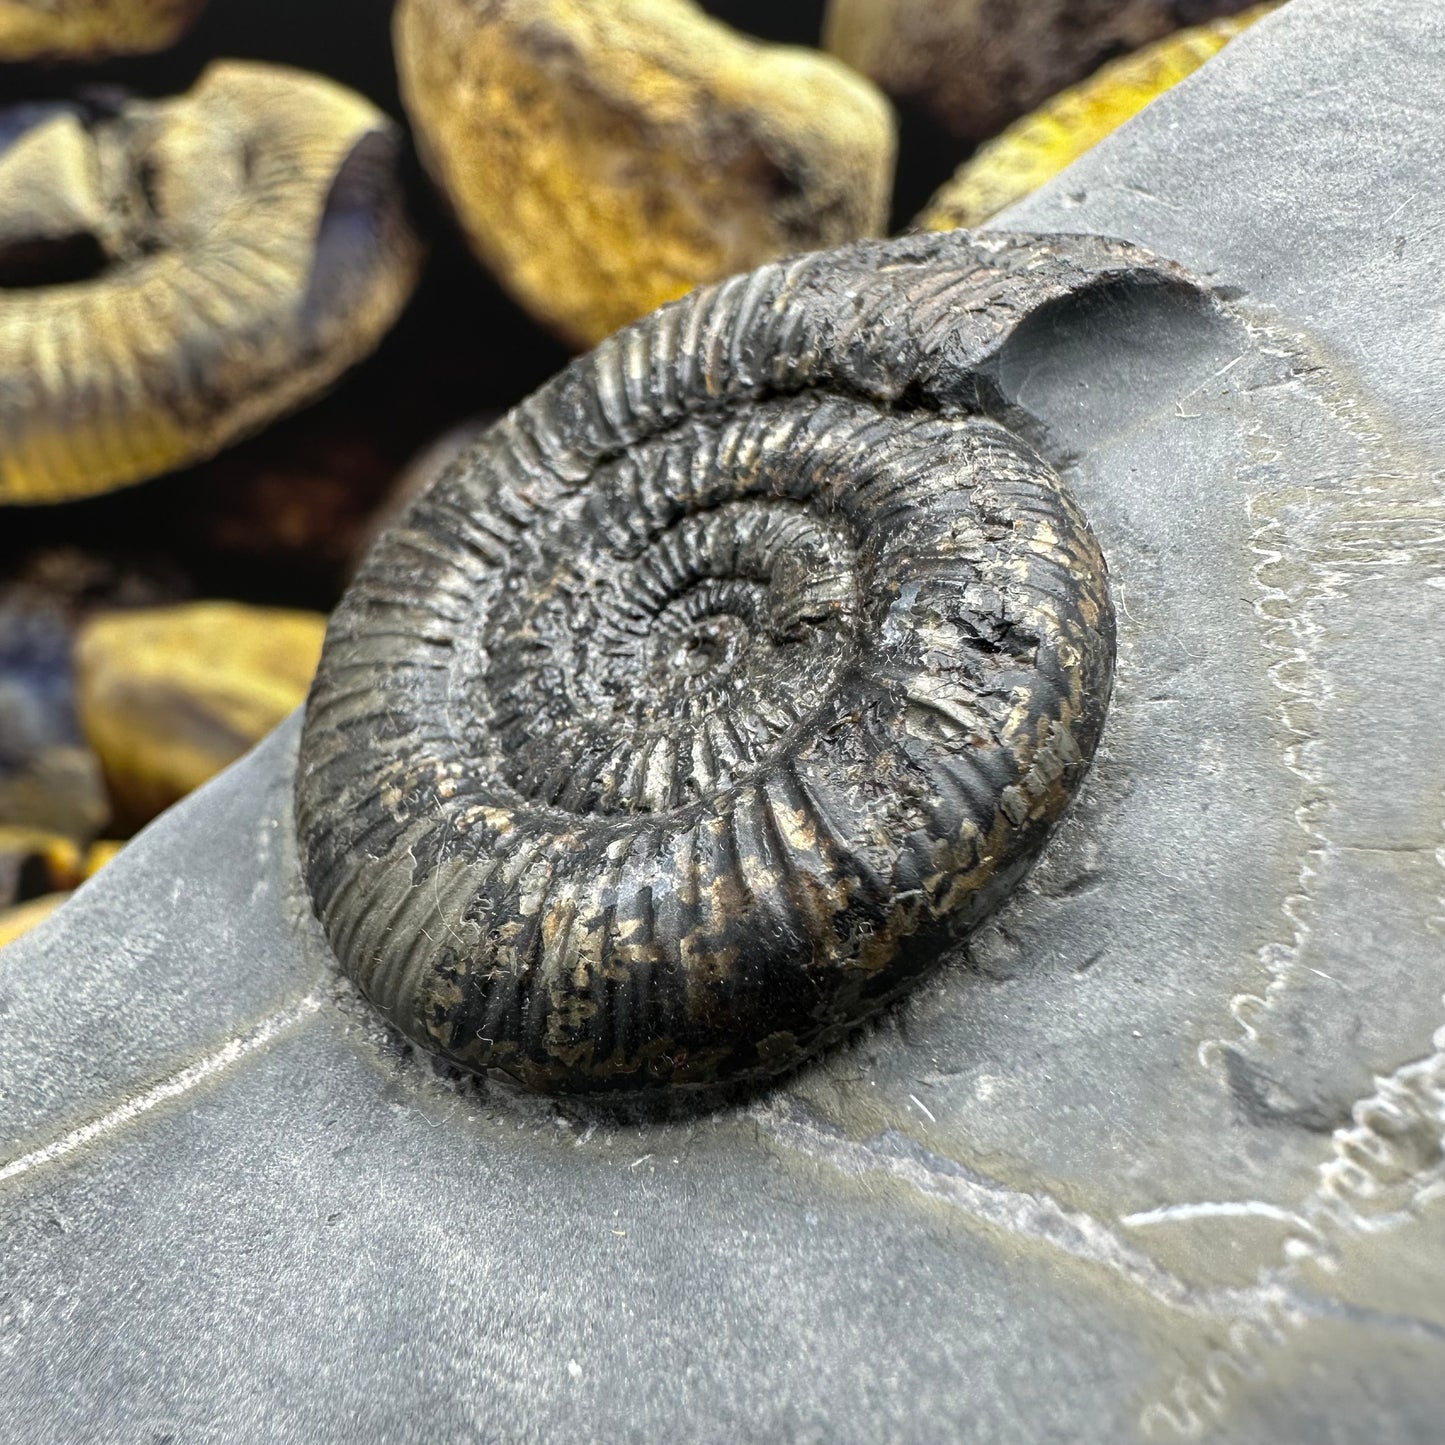 Dactylioceras semicelatum ammonite fossil - Whitby, North Yorkshire Jurassic Coast